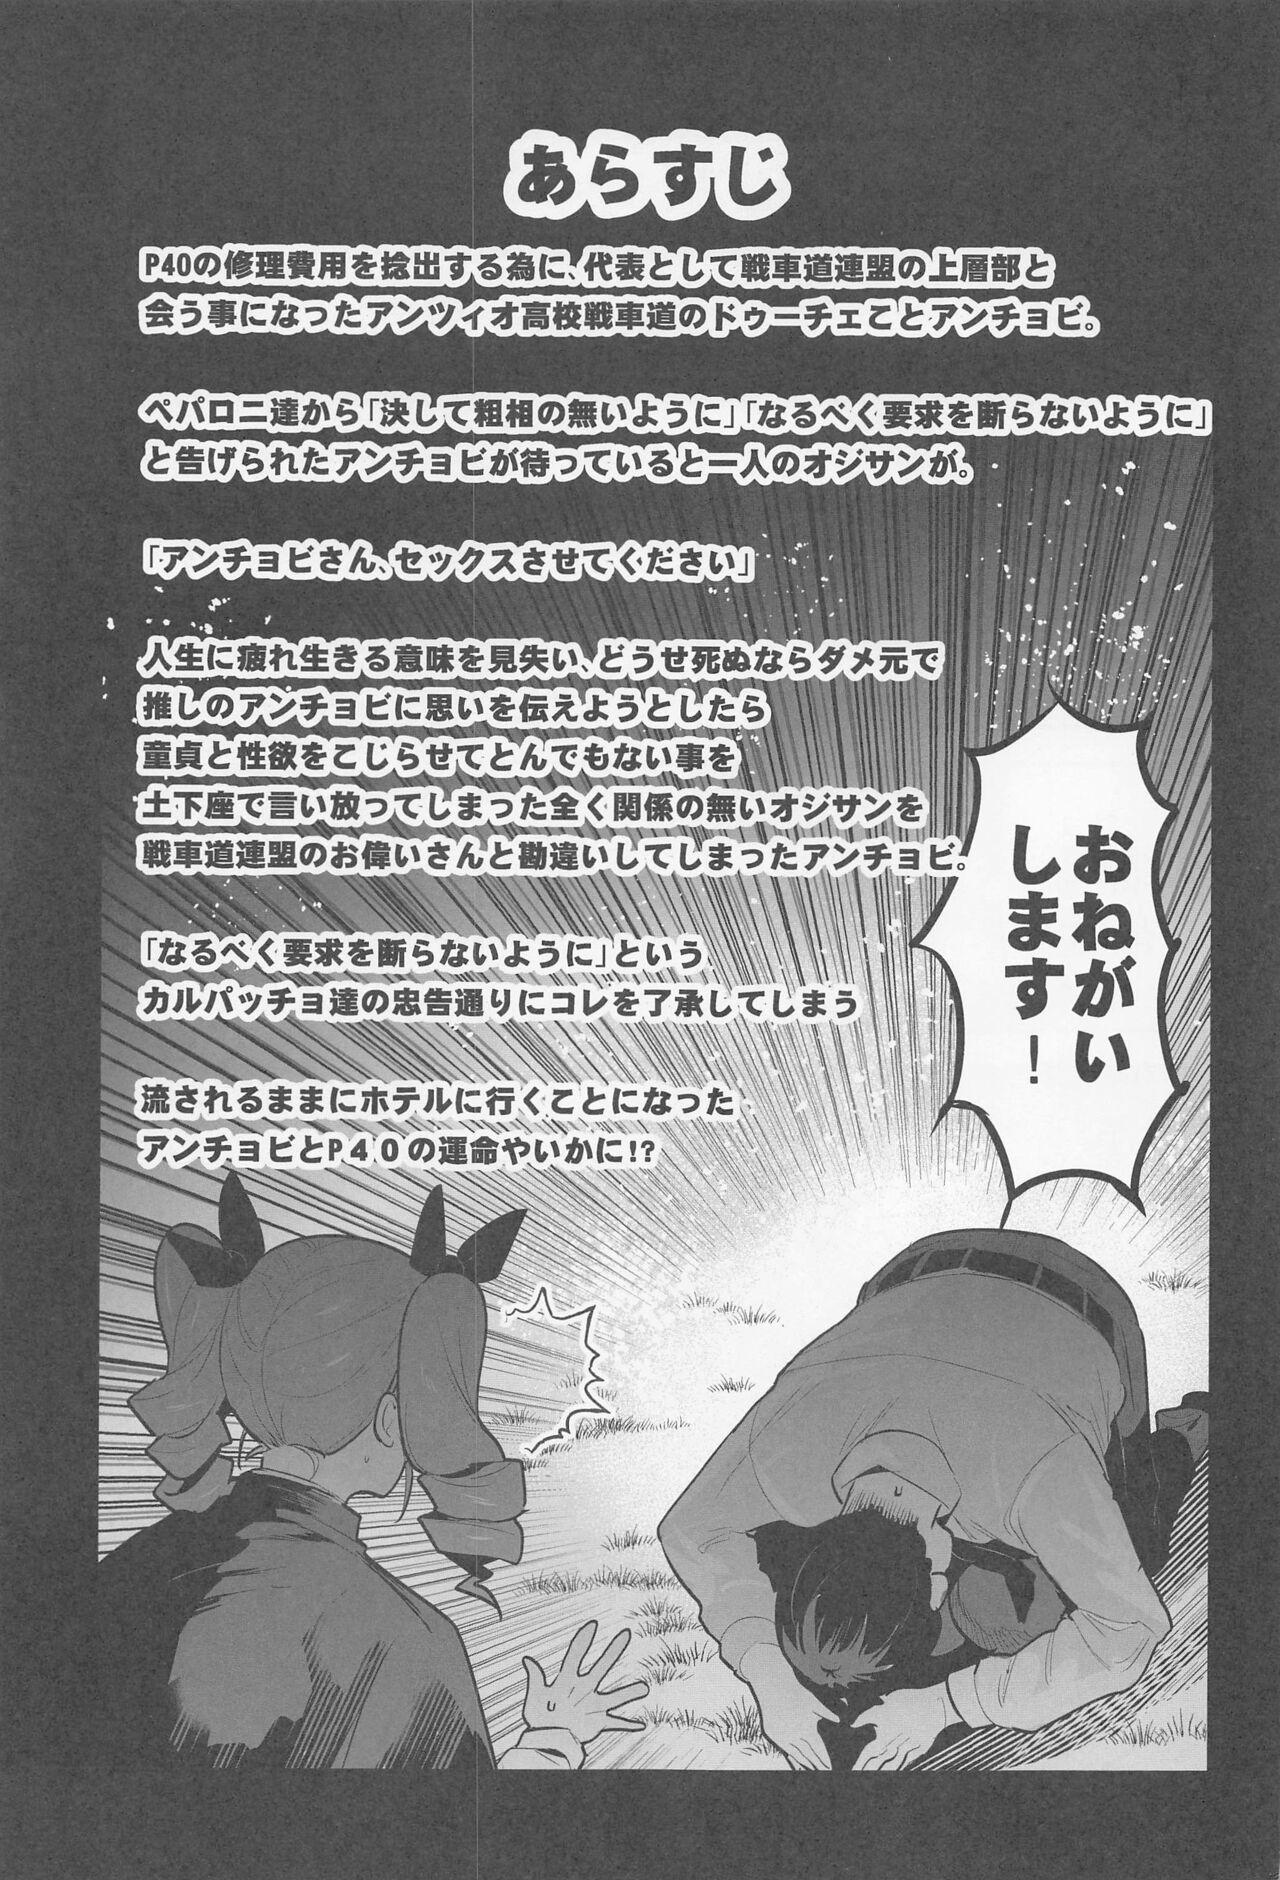 Bisex anchobi dogezadeonegaishitaraippatsuyarasetekuremashita - Girls und panzer Strapon - Page 2